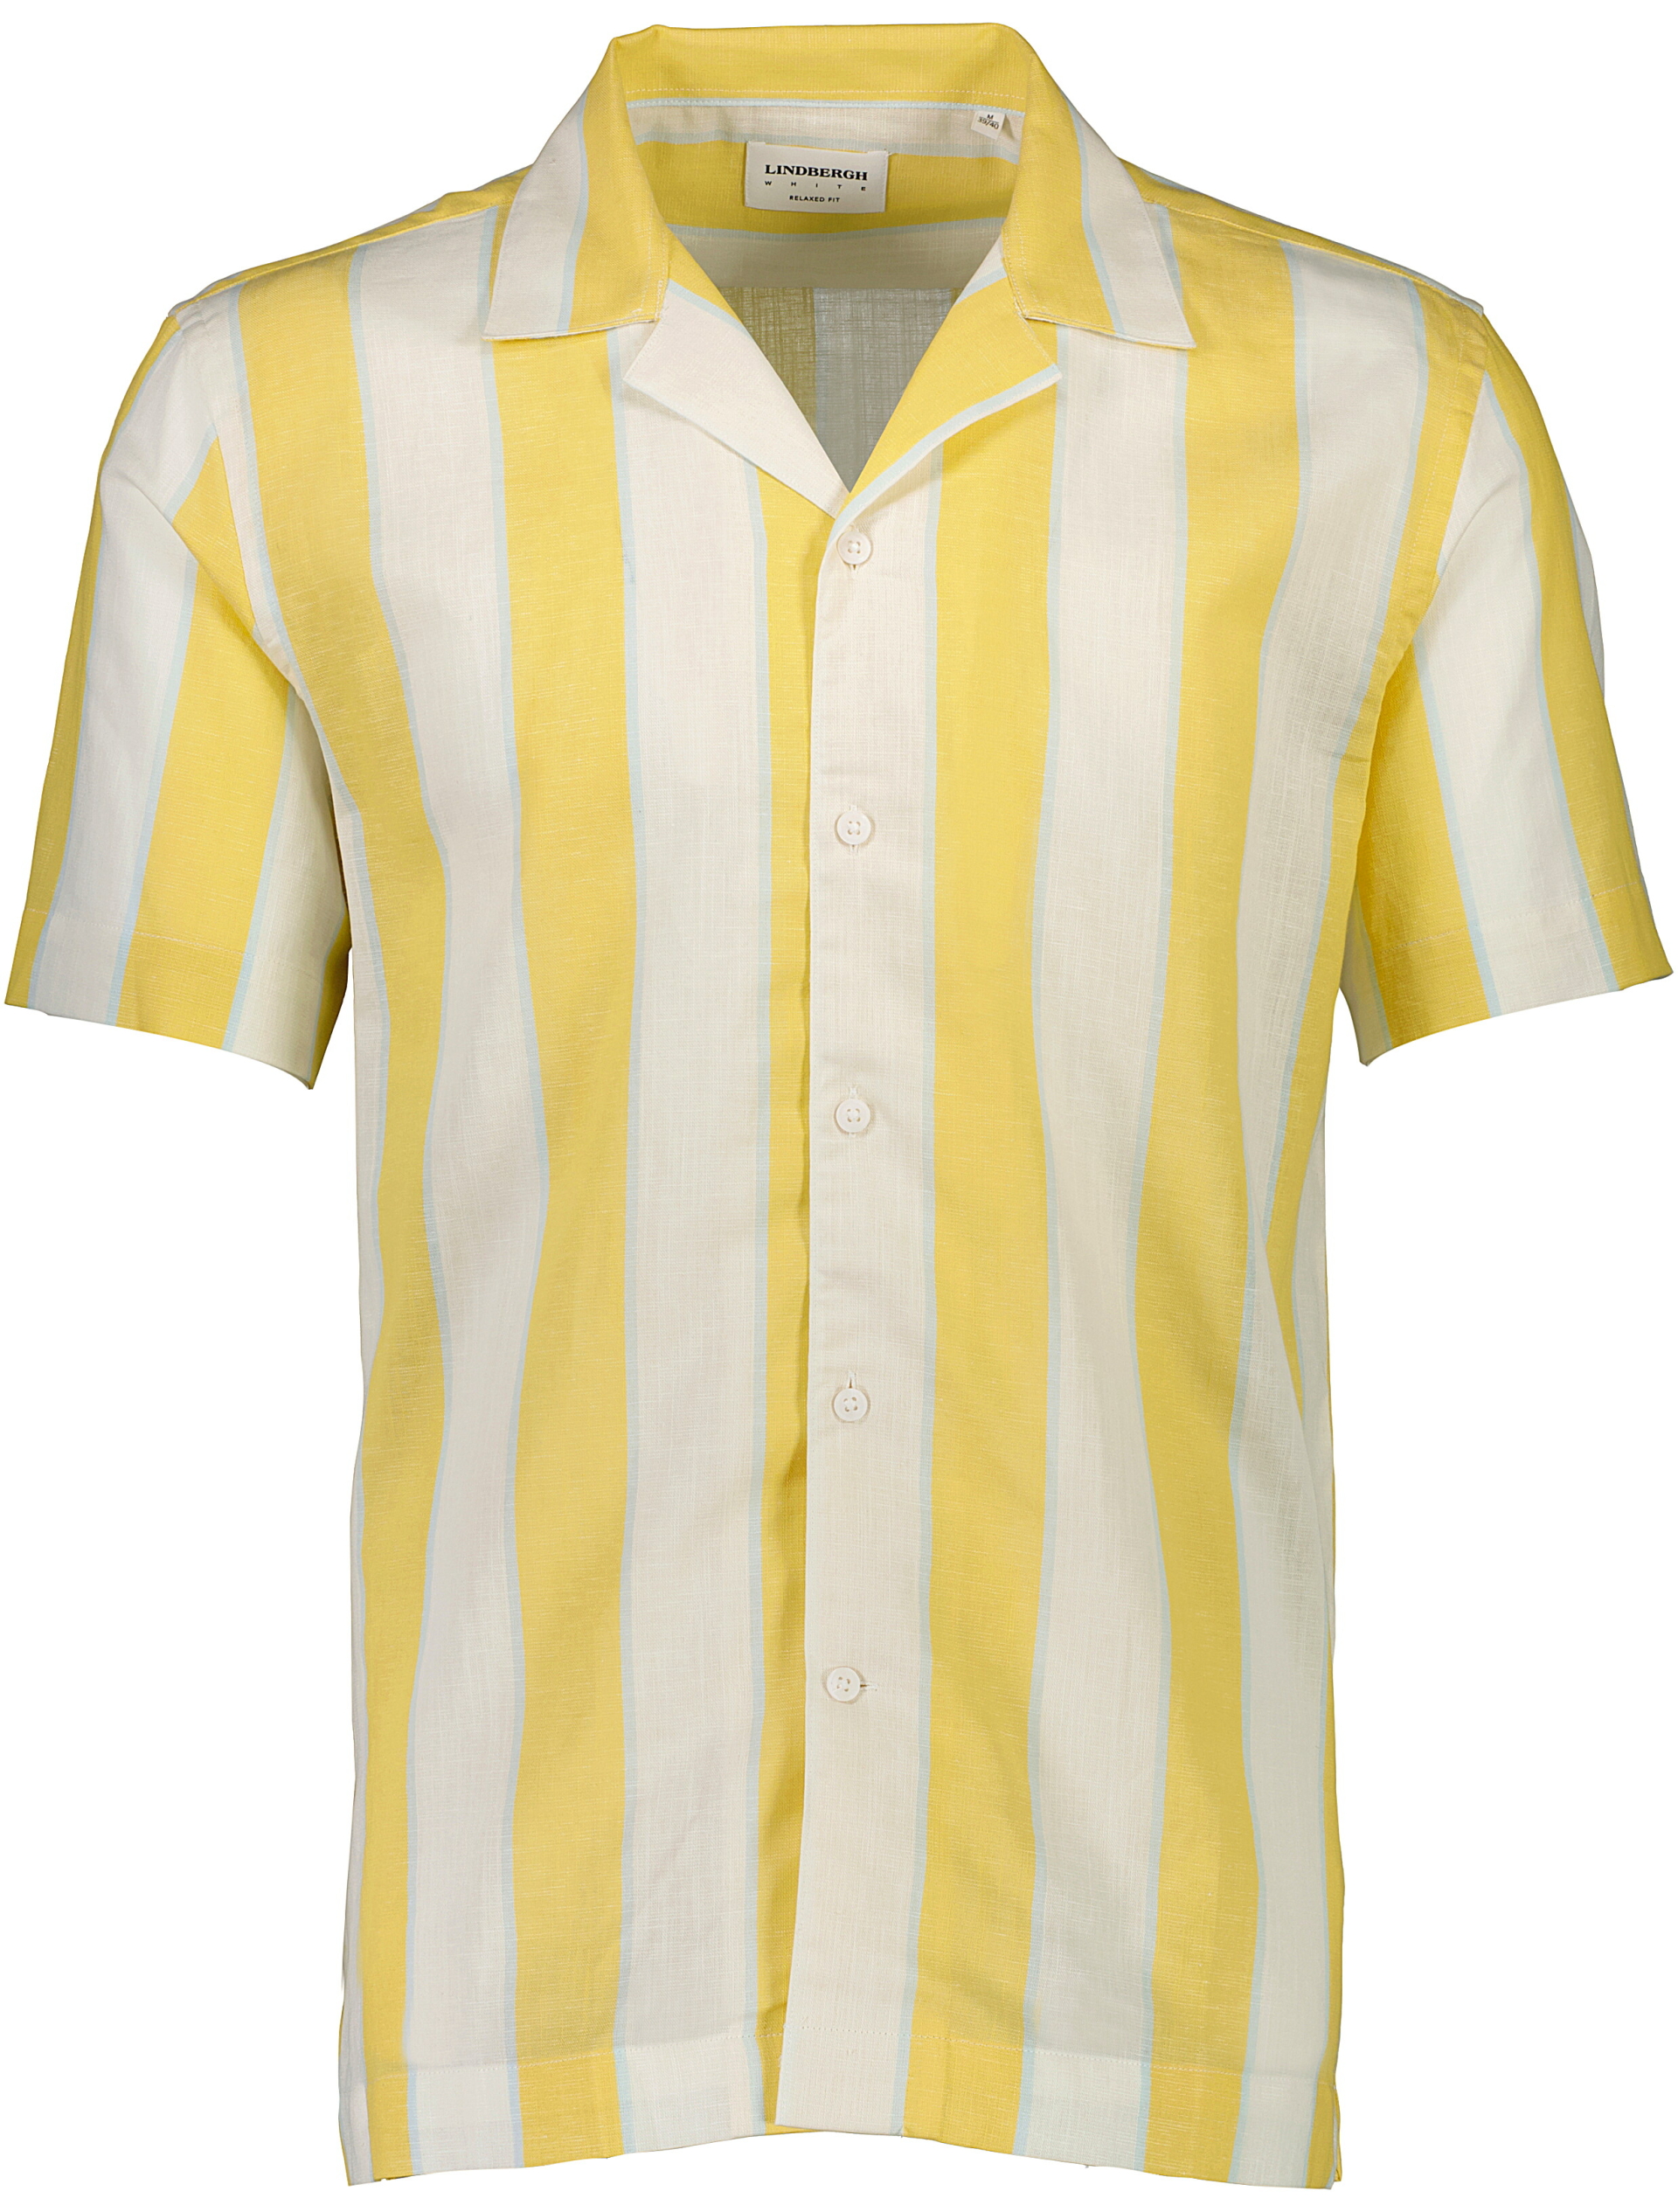 Lindbergh Linen shirt yellow / yellow